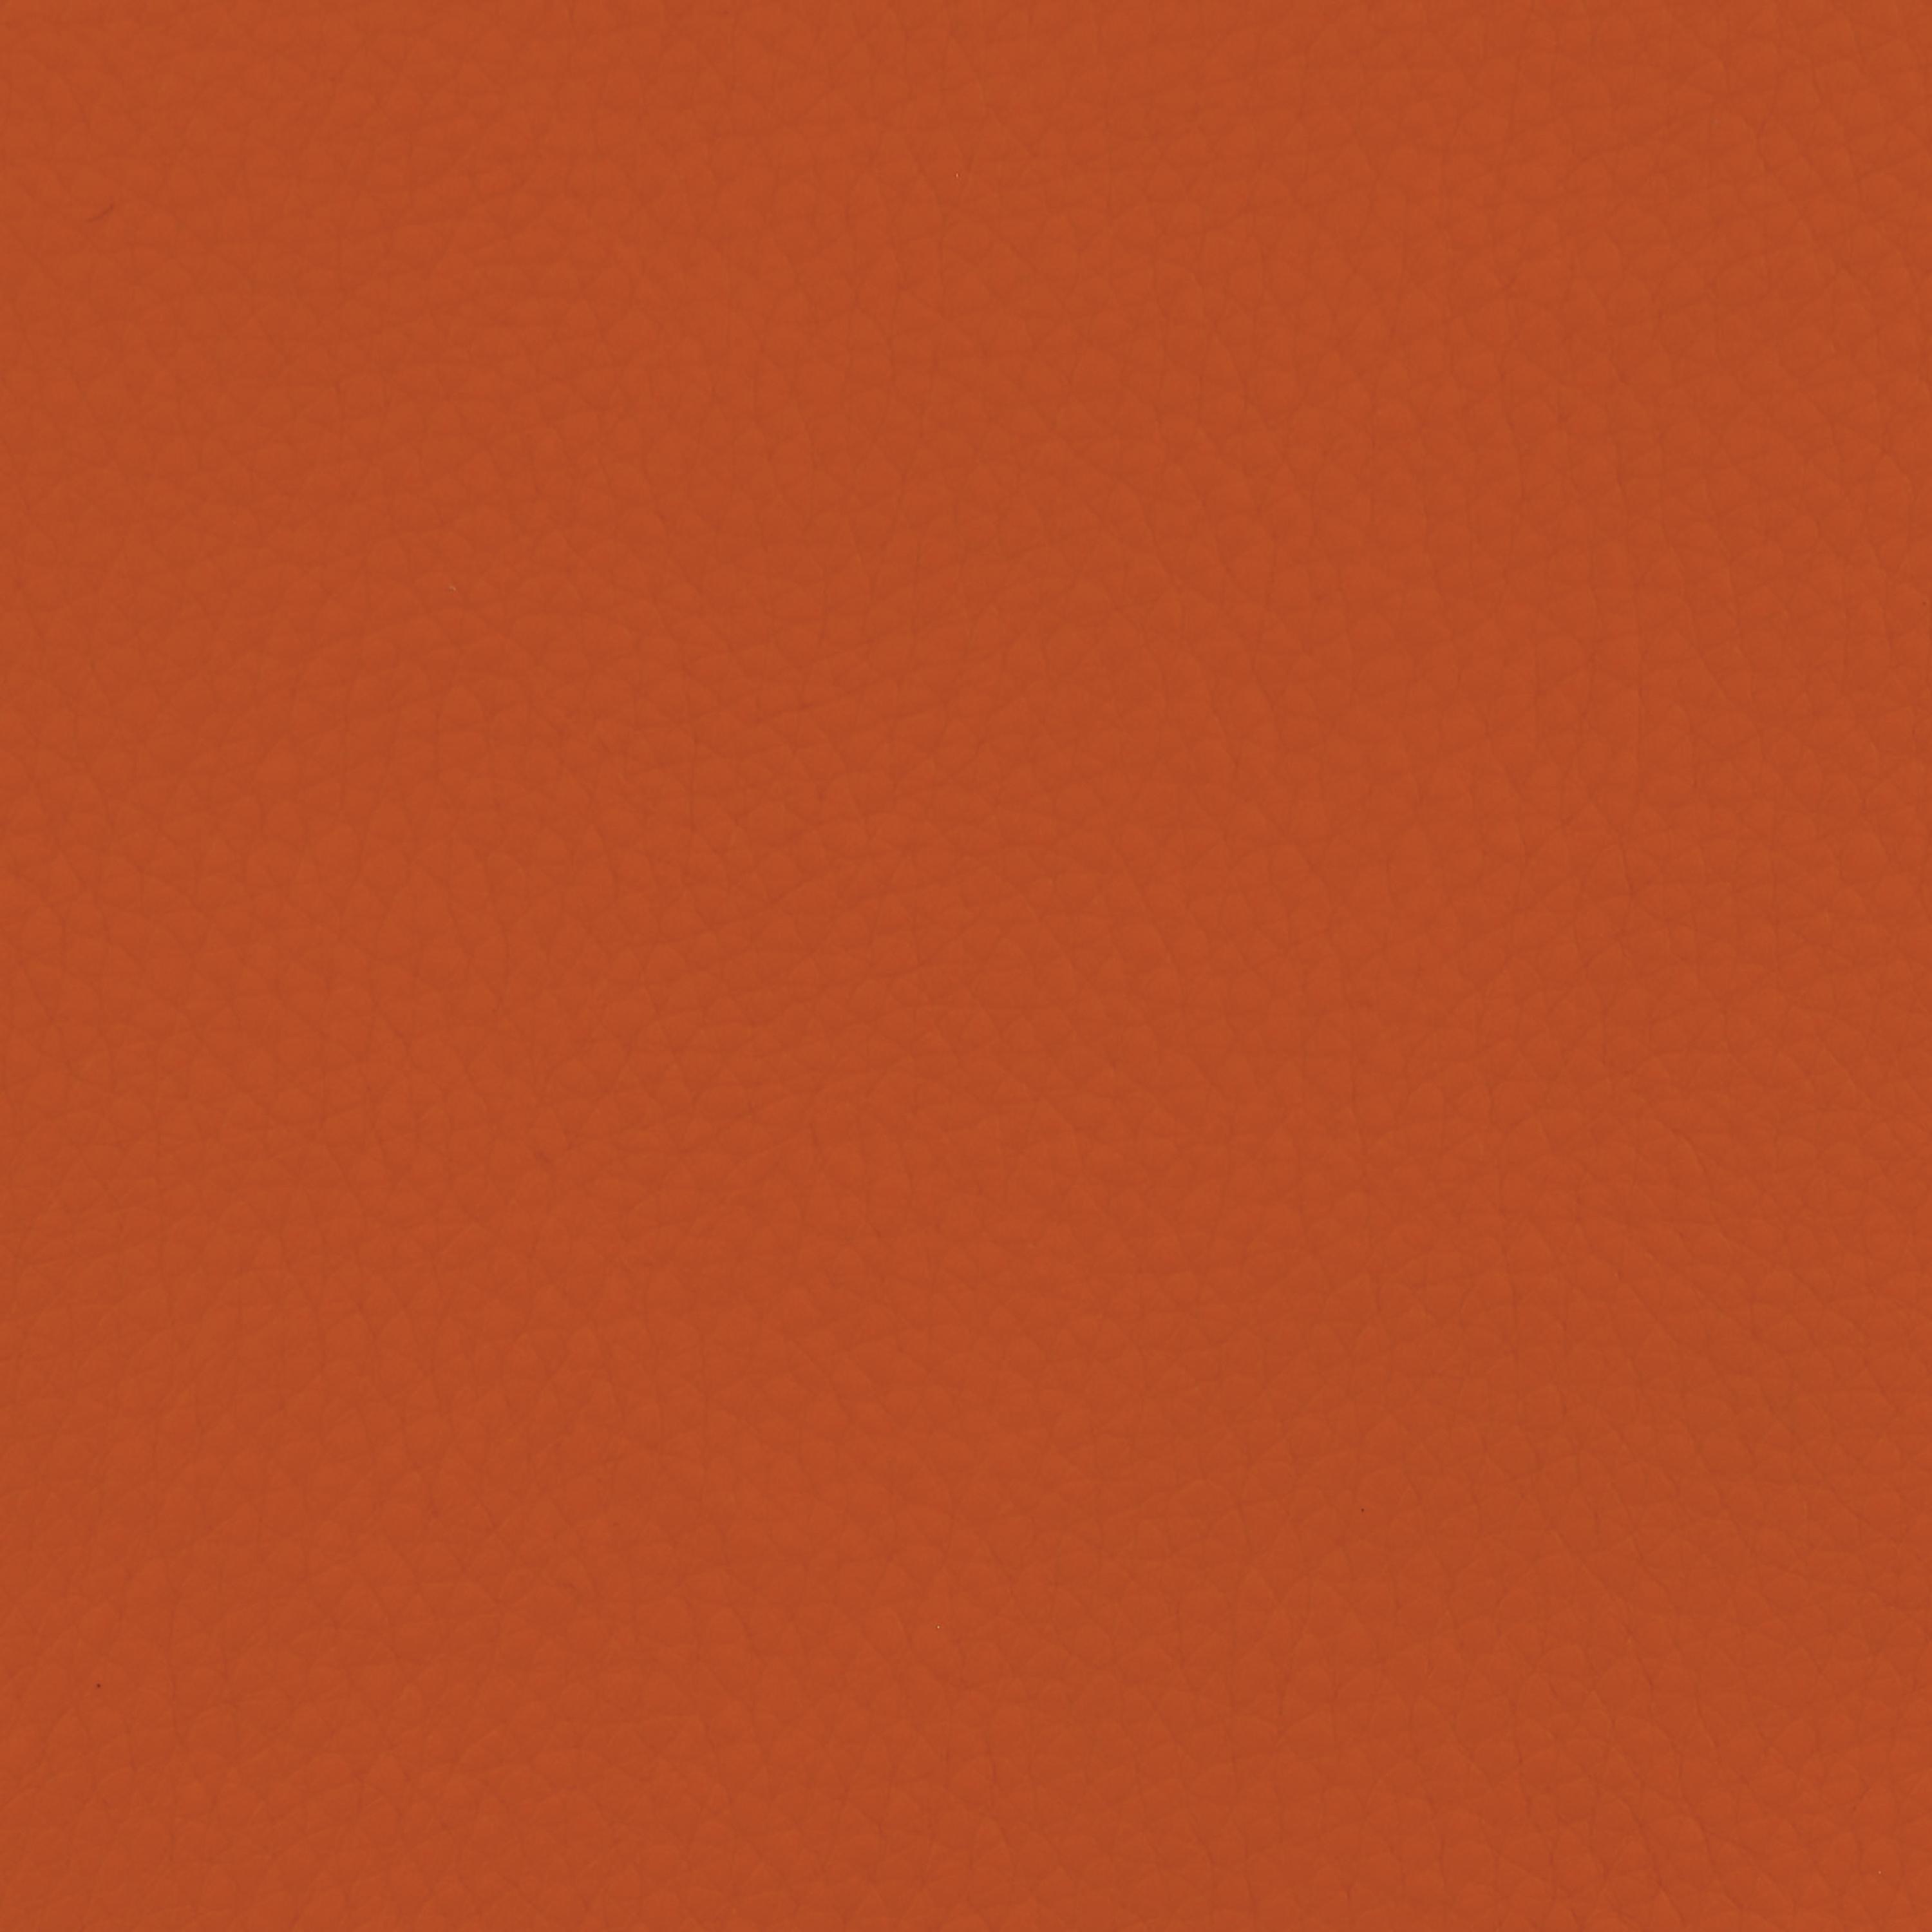 

    
Modern Chrome & Orange Leatherette Bar Stool Coaster 121098
